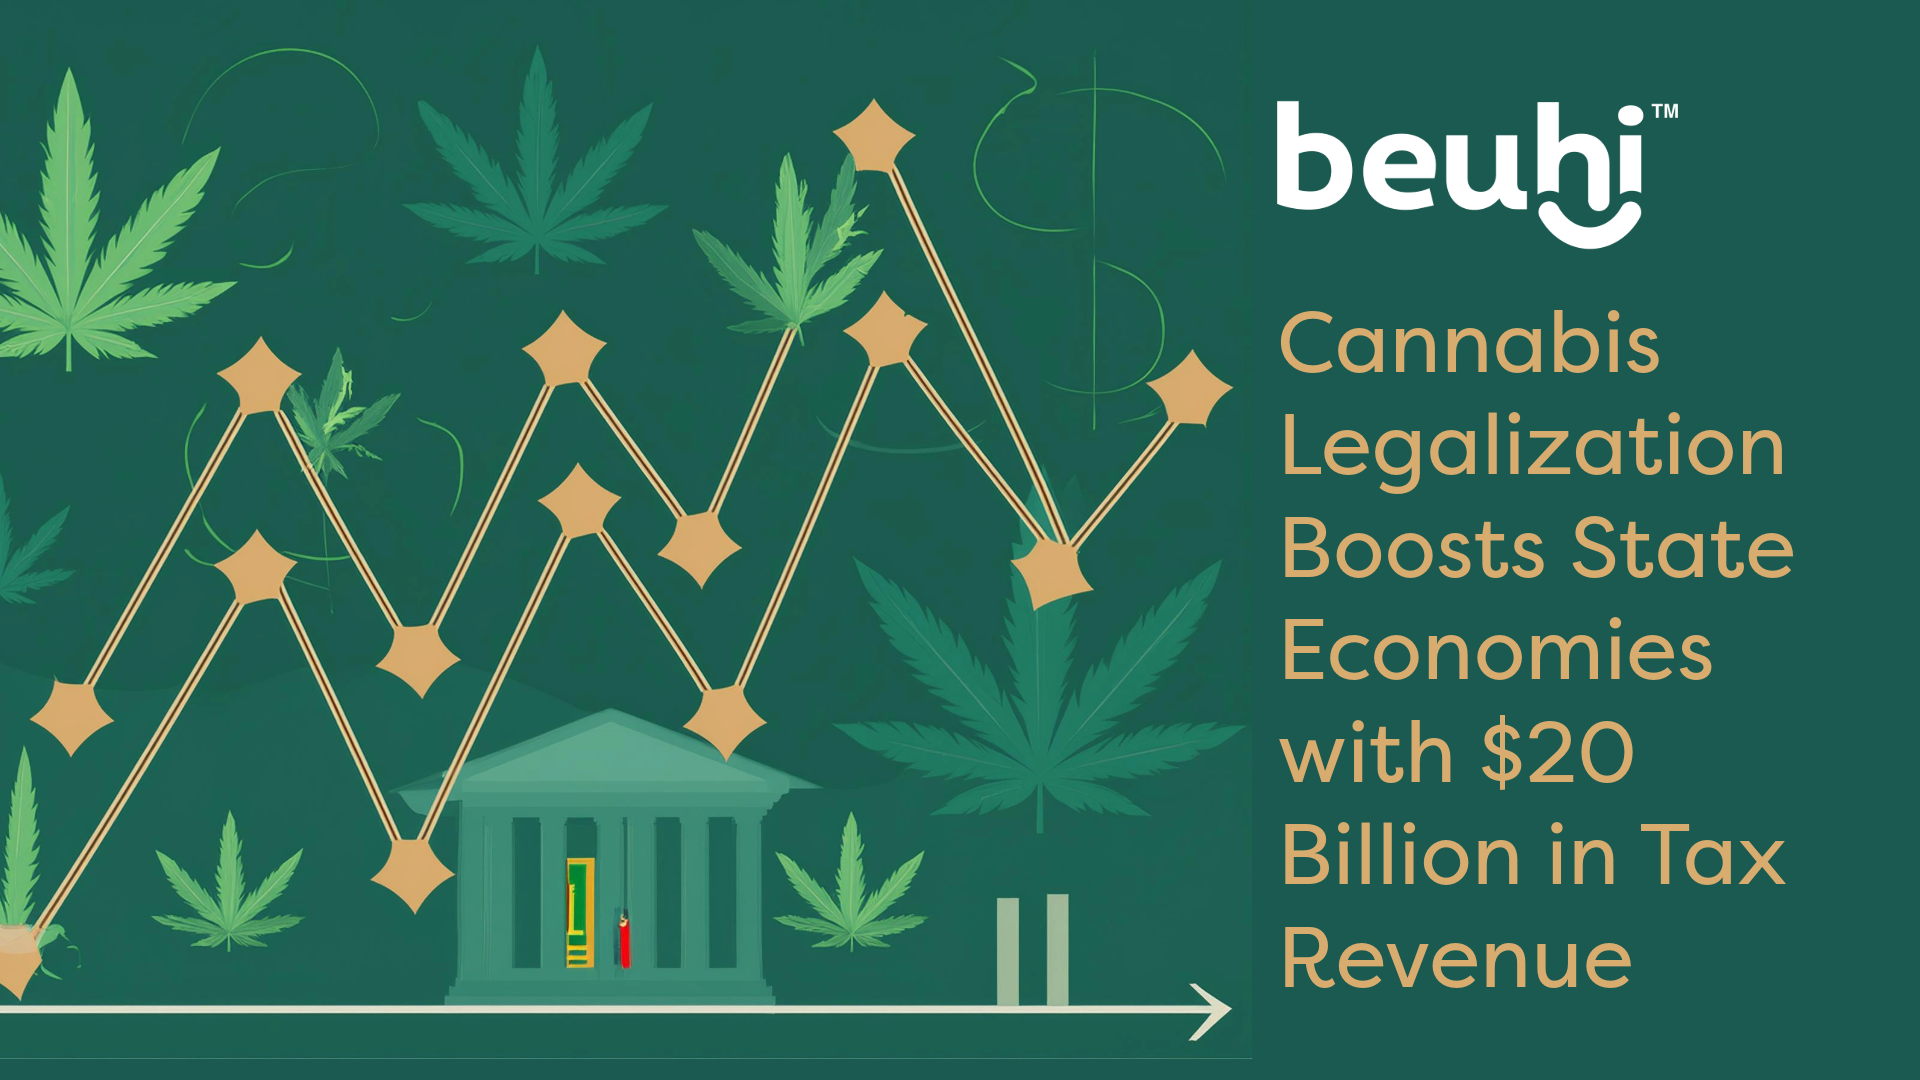 Cannabis Legalization Boosts State Economies in Tax Revenue